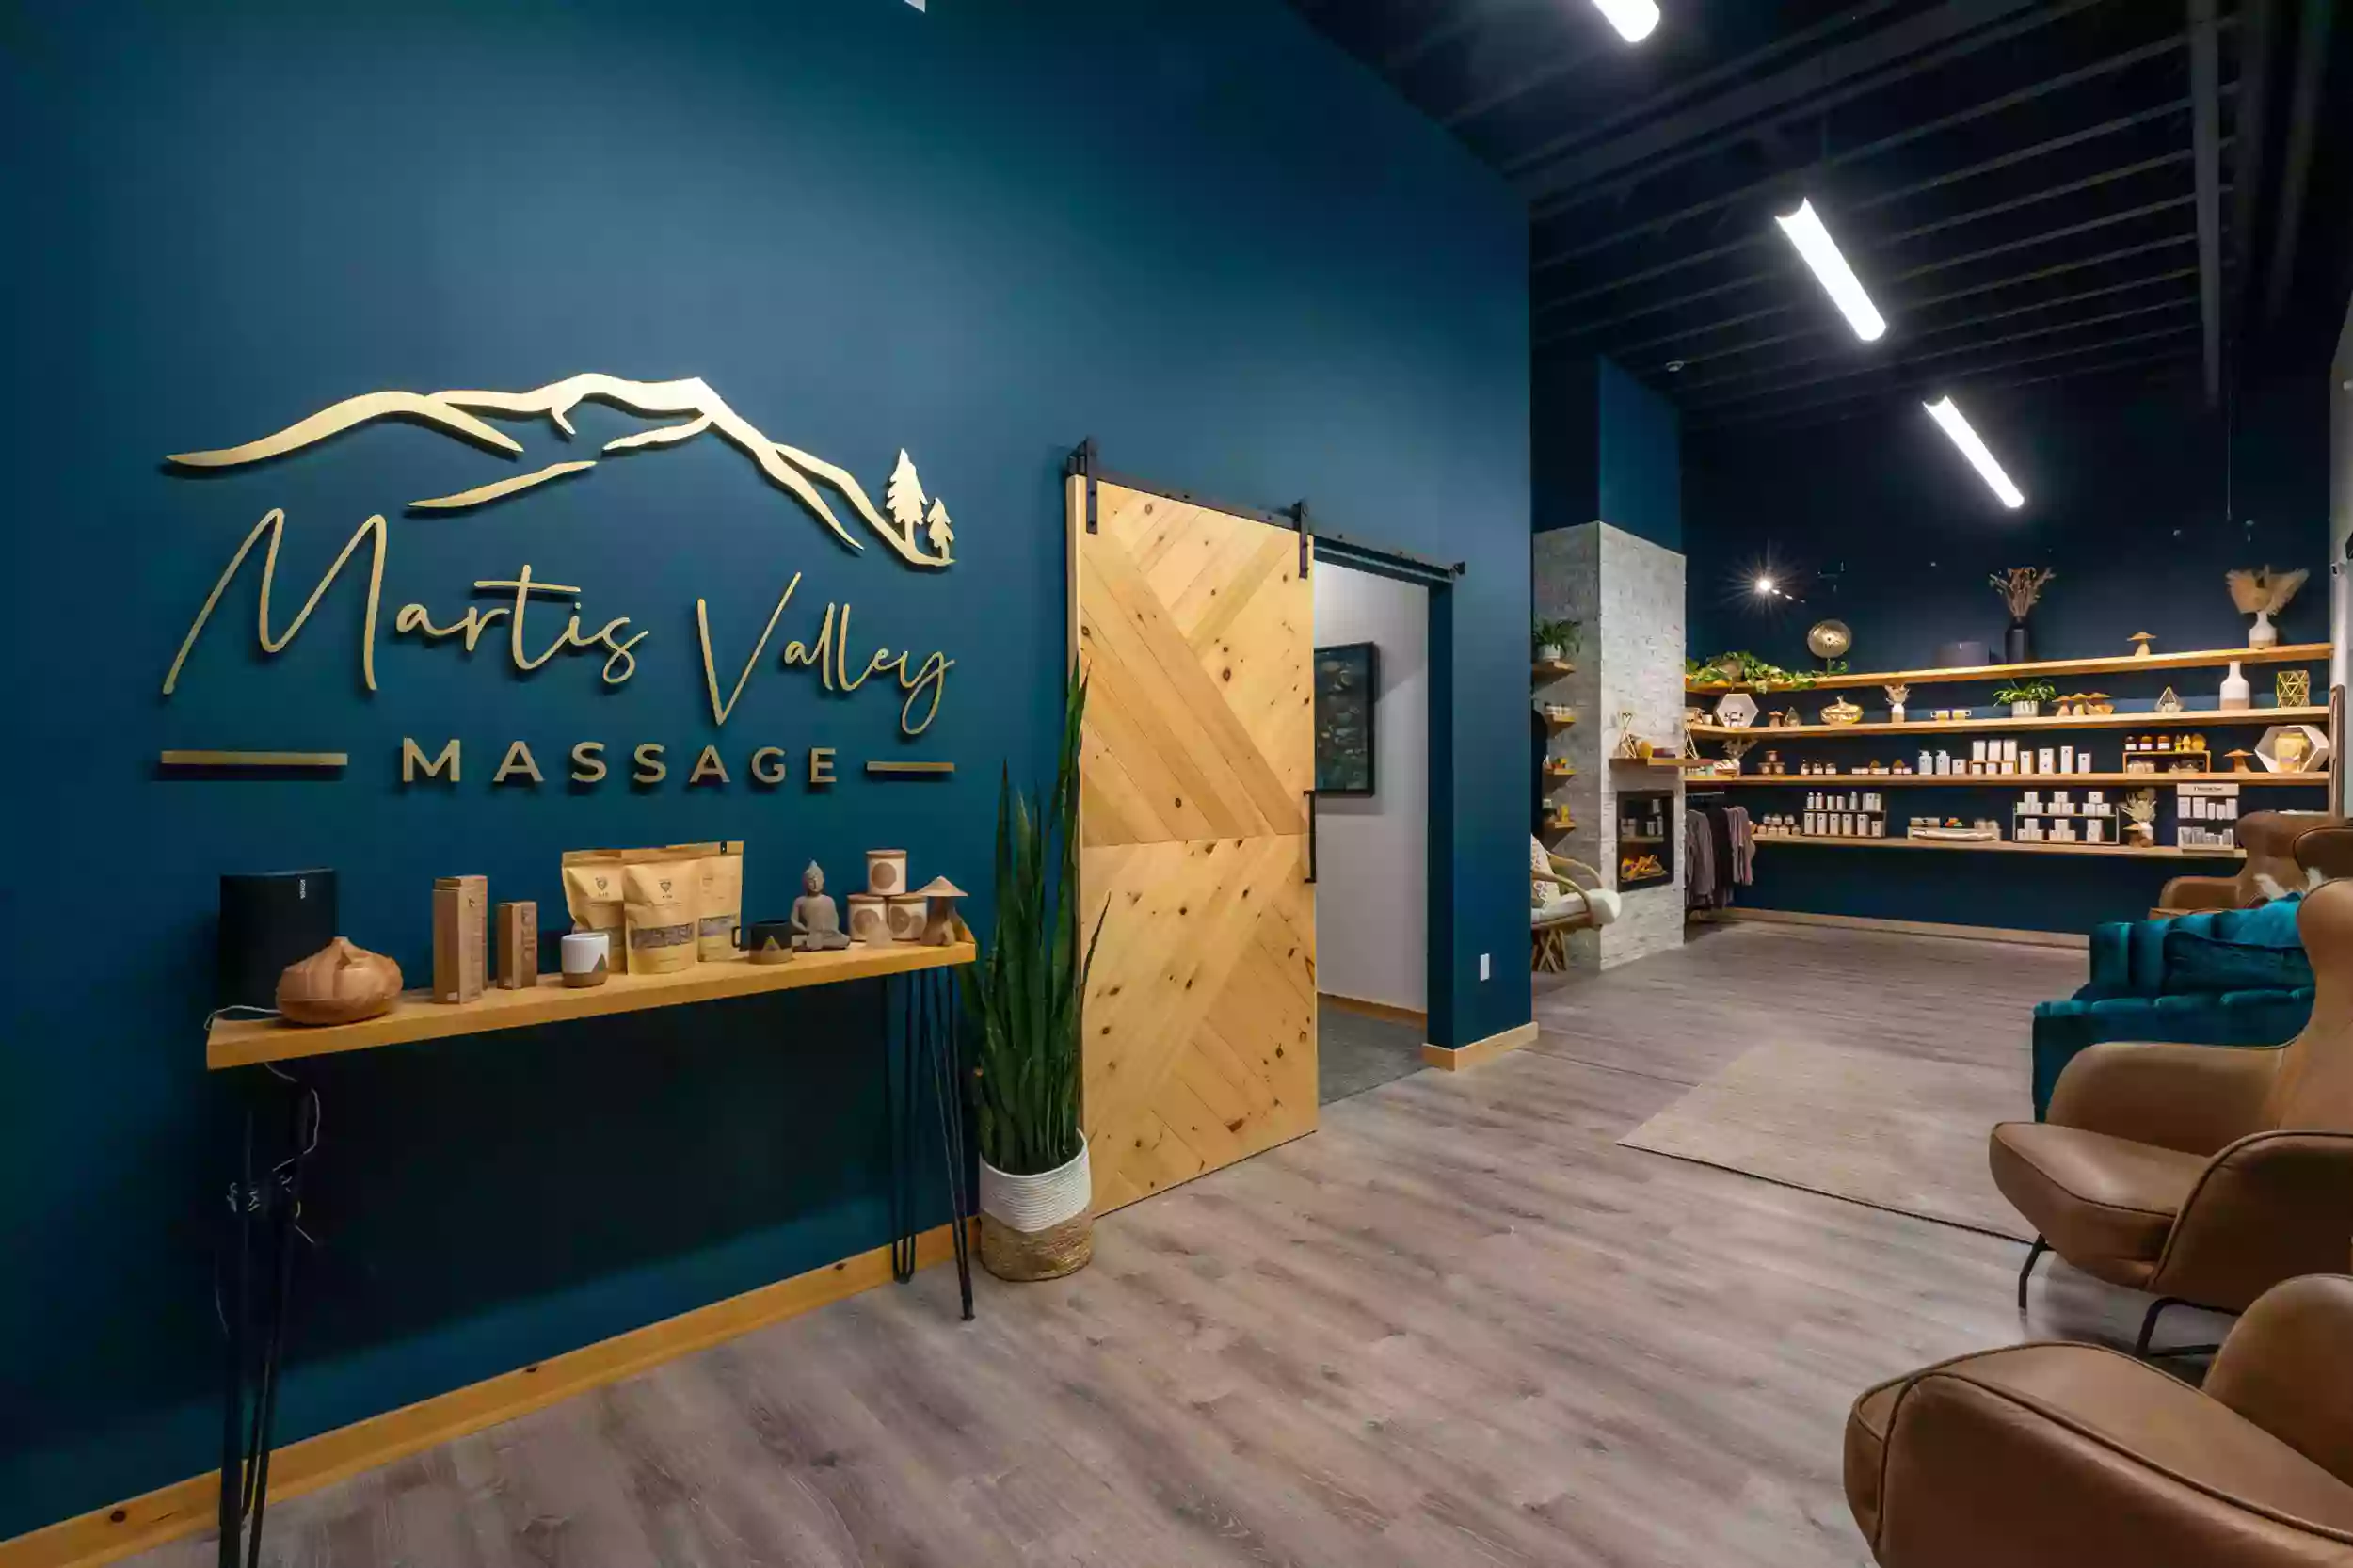 Martis Valley Massage & Skincare